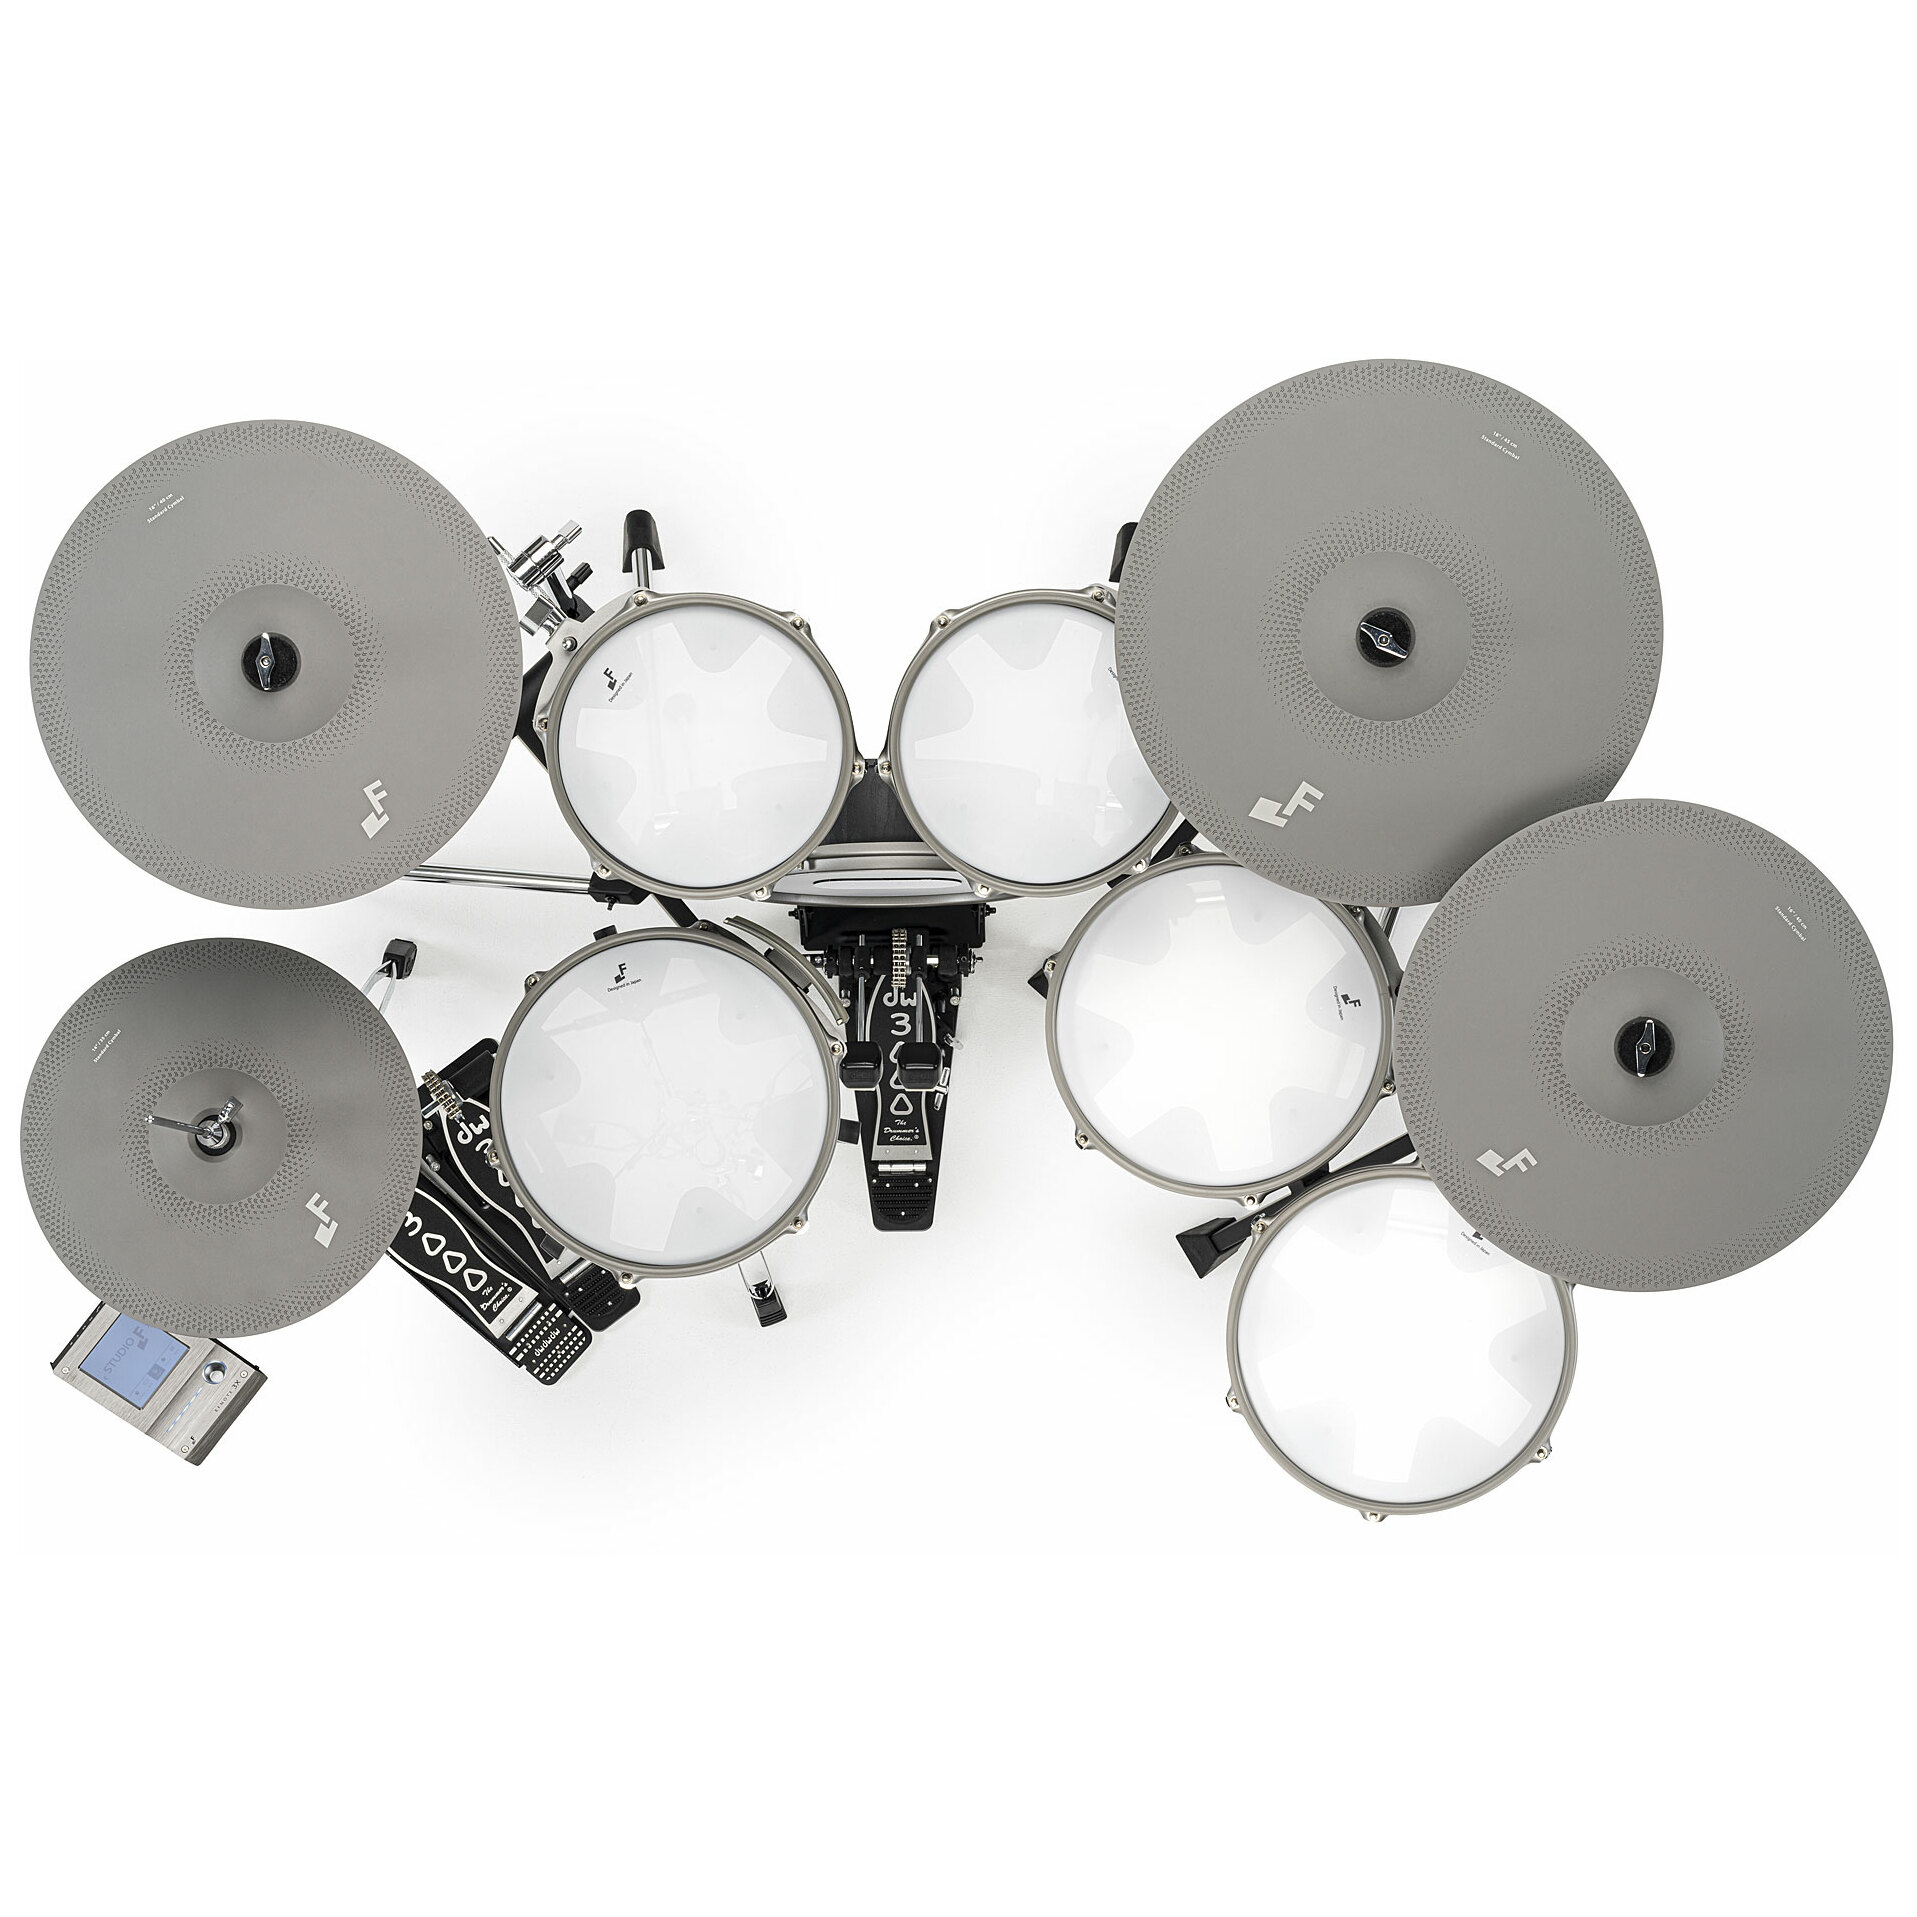 Efnote 3X - E-Drum Set 2